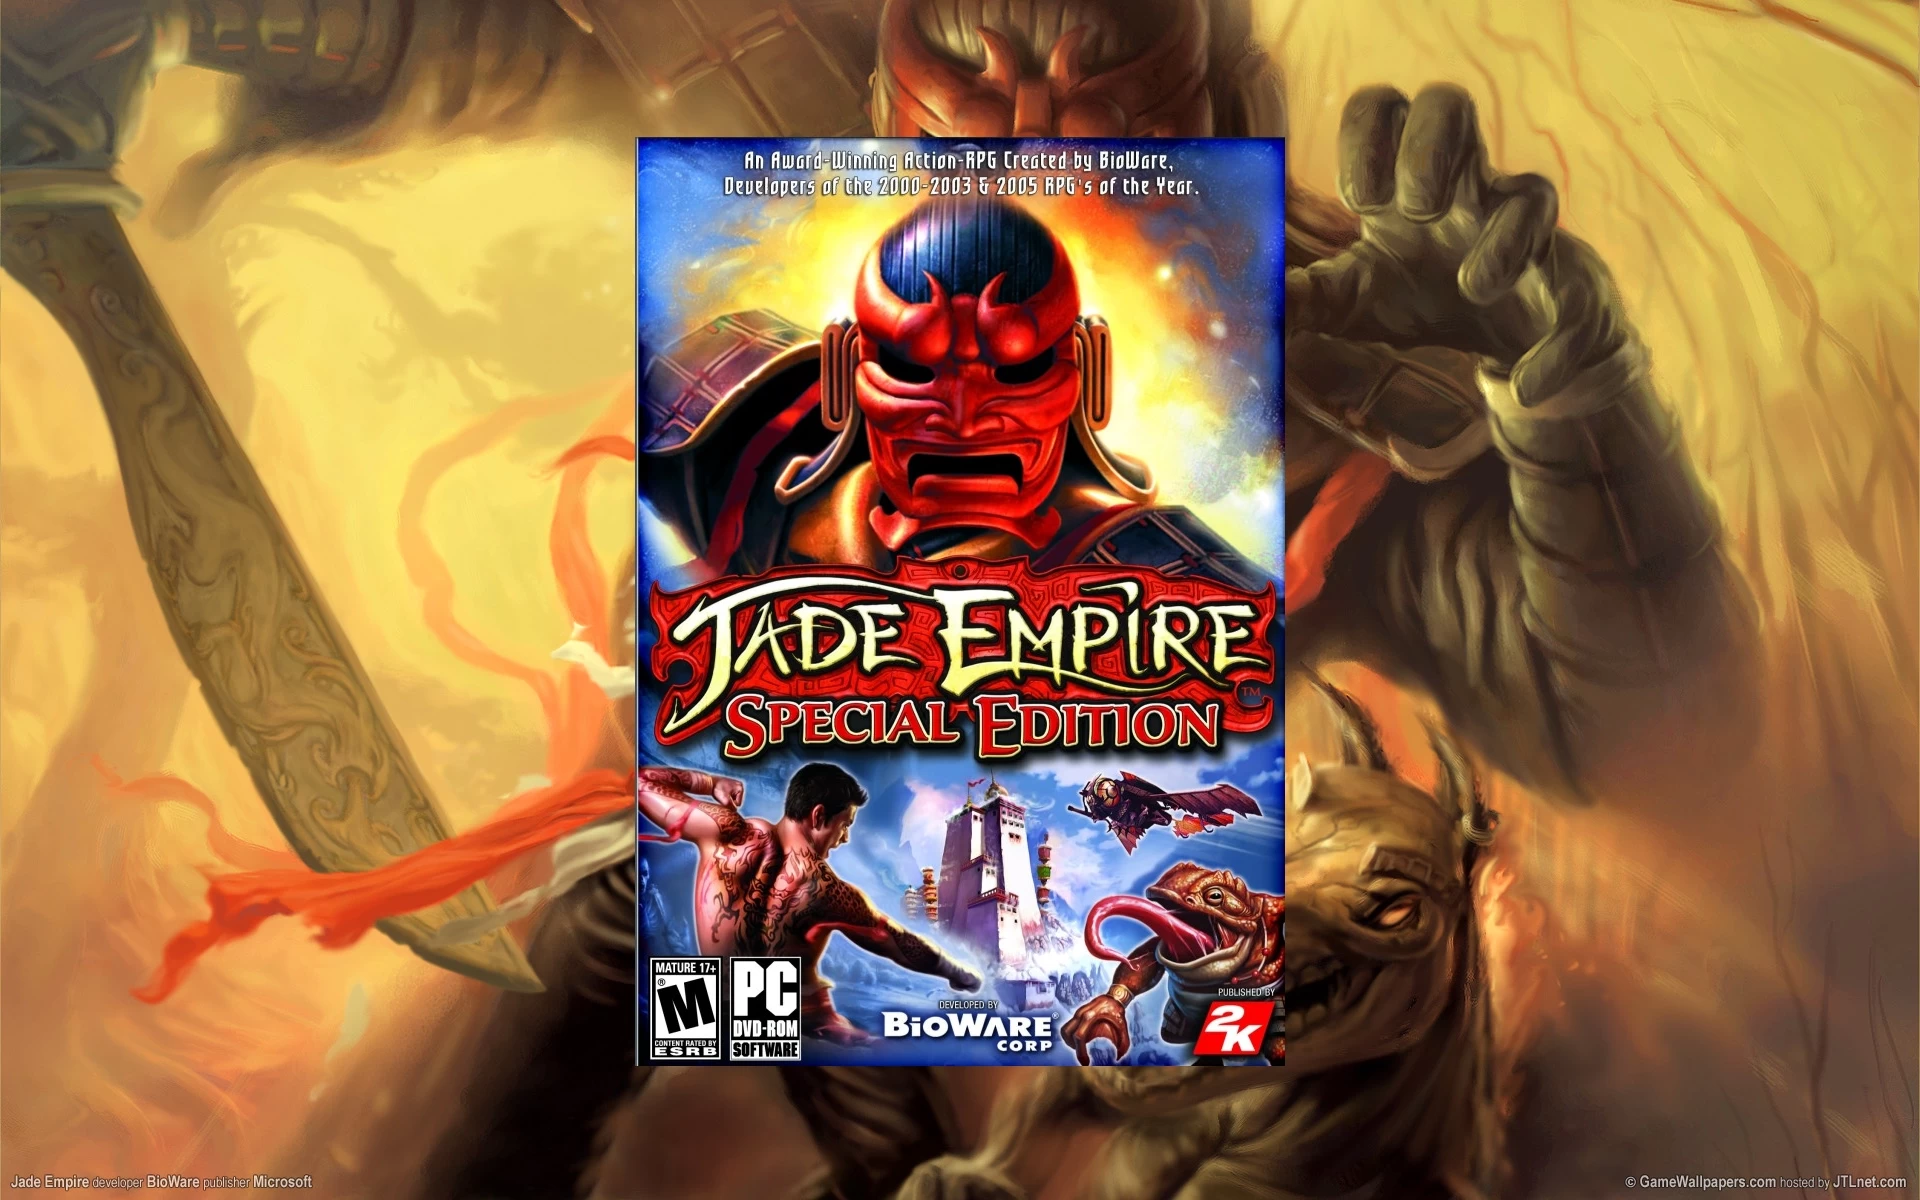 jade empire special edition | EA | EA แจกฟรี! เกมในตำนานประมาณ 10 ปีก่อน 'Jade empire special edition' เกมตัวเต็มเวอร์ชั่น PC เปิดจำหน่ายราคา 0 บาทในเวลาจำกัด [วิธีดาวน์โหลดด้านใน]